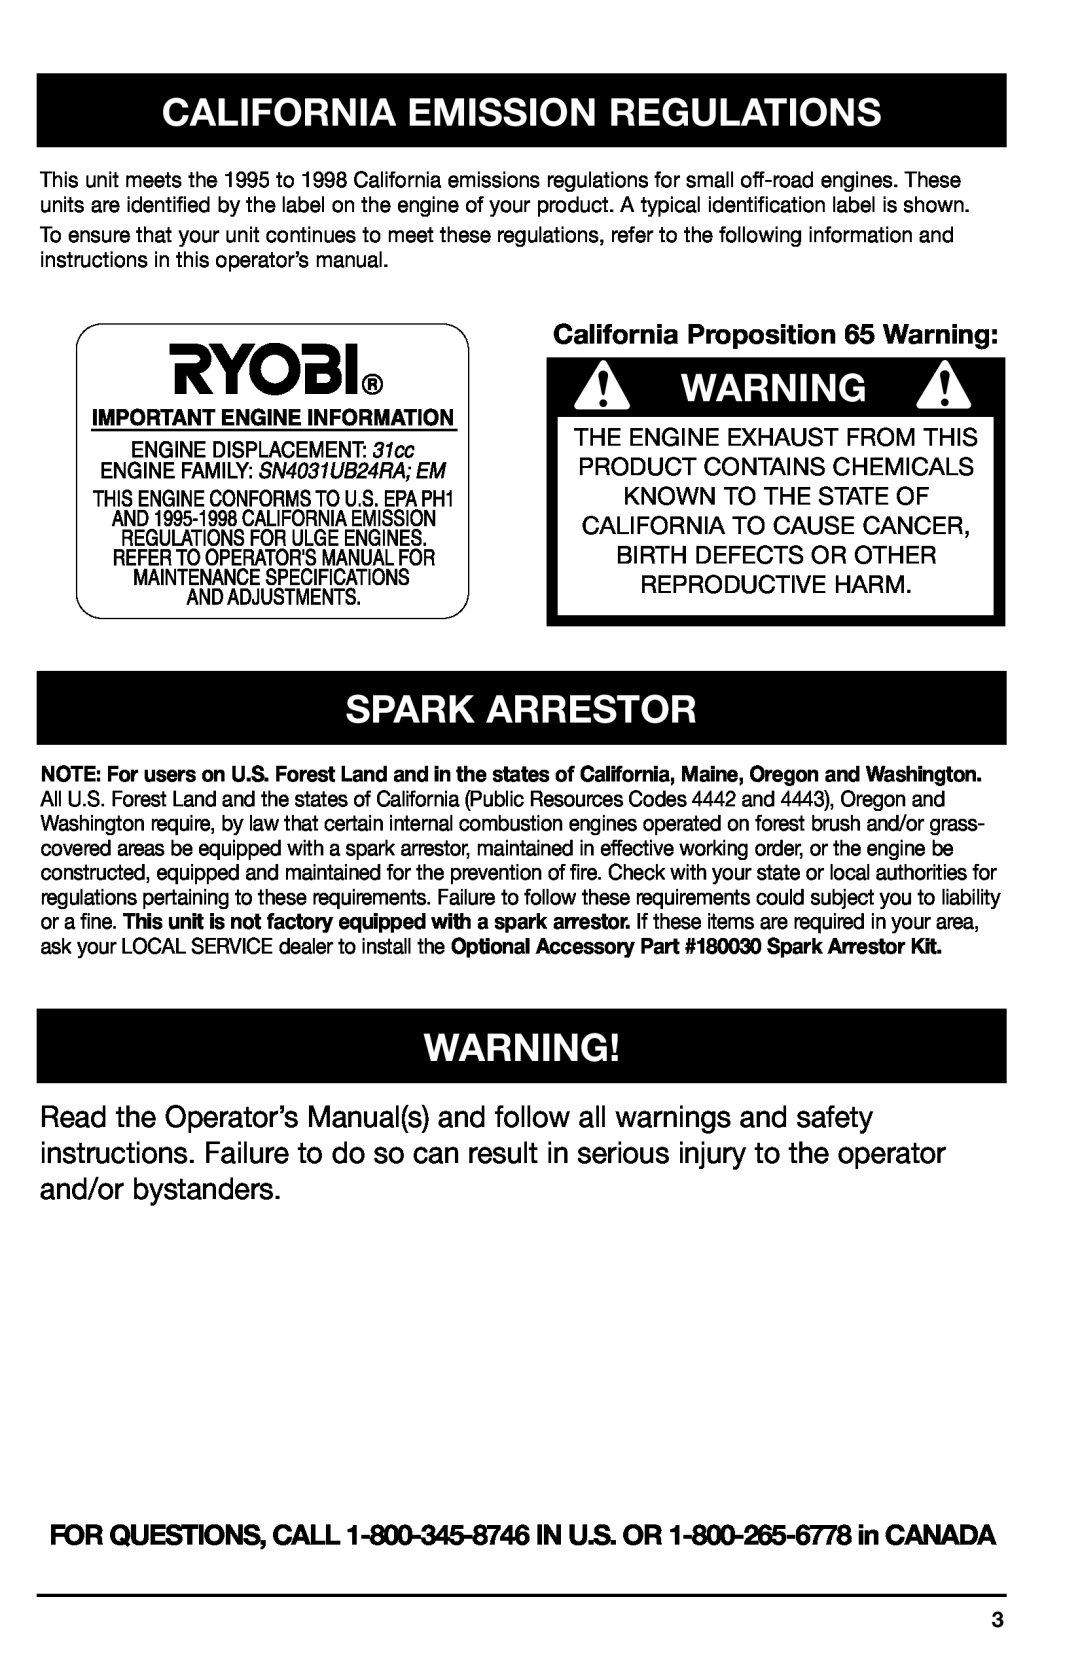 Ryobi 700r manual California Emission Regulations, Spark Arrestor, California Proposition 65 Warning 